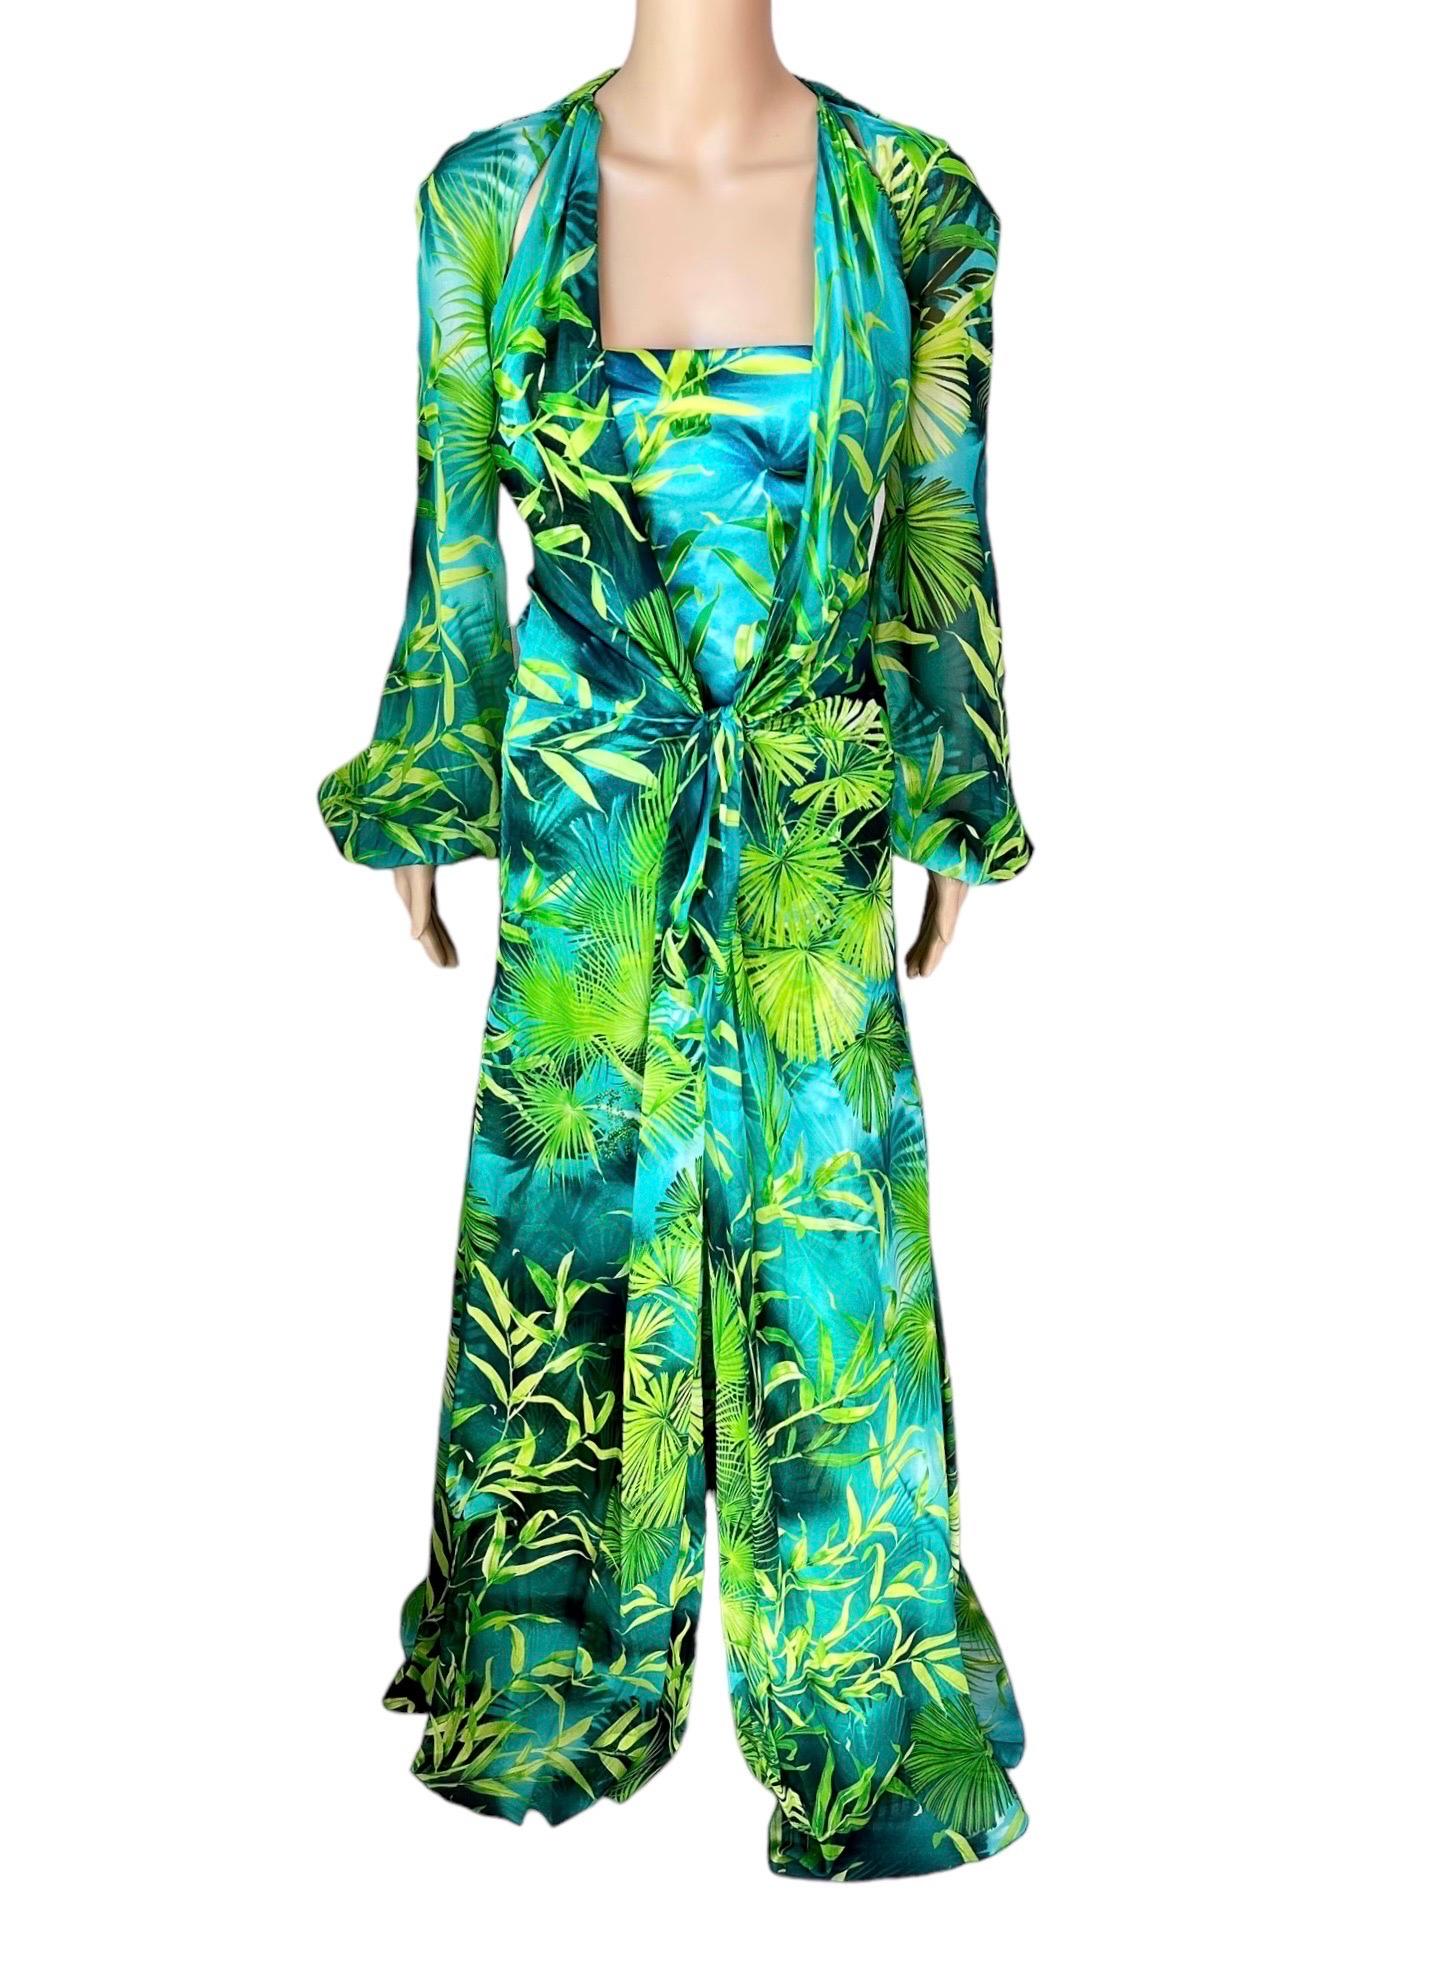 Versace S/S 2020 Plunging Jungle Print Bodysuit & Evening Dress Gown Set 6